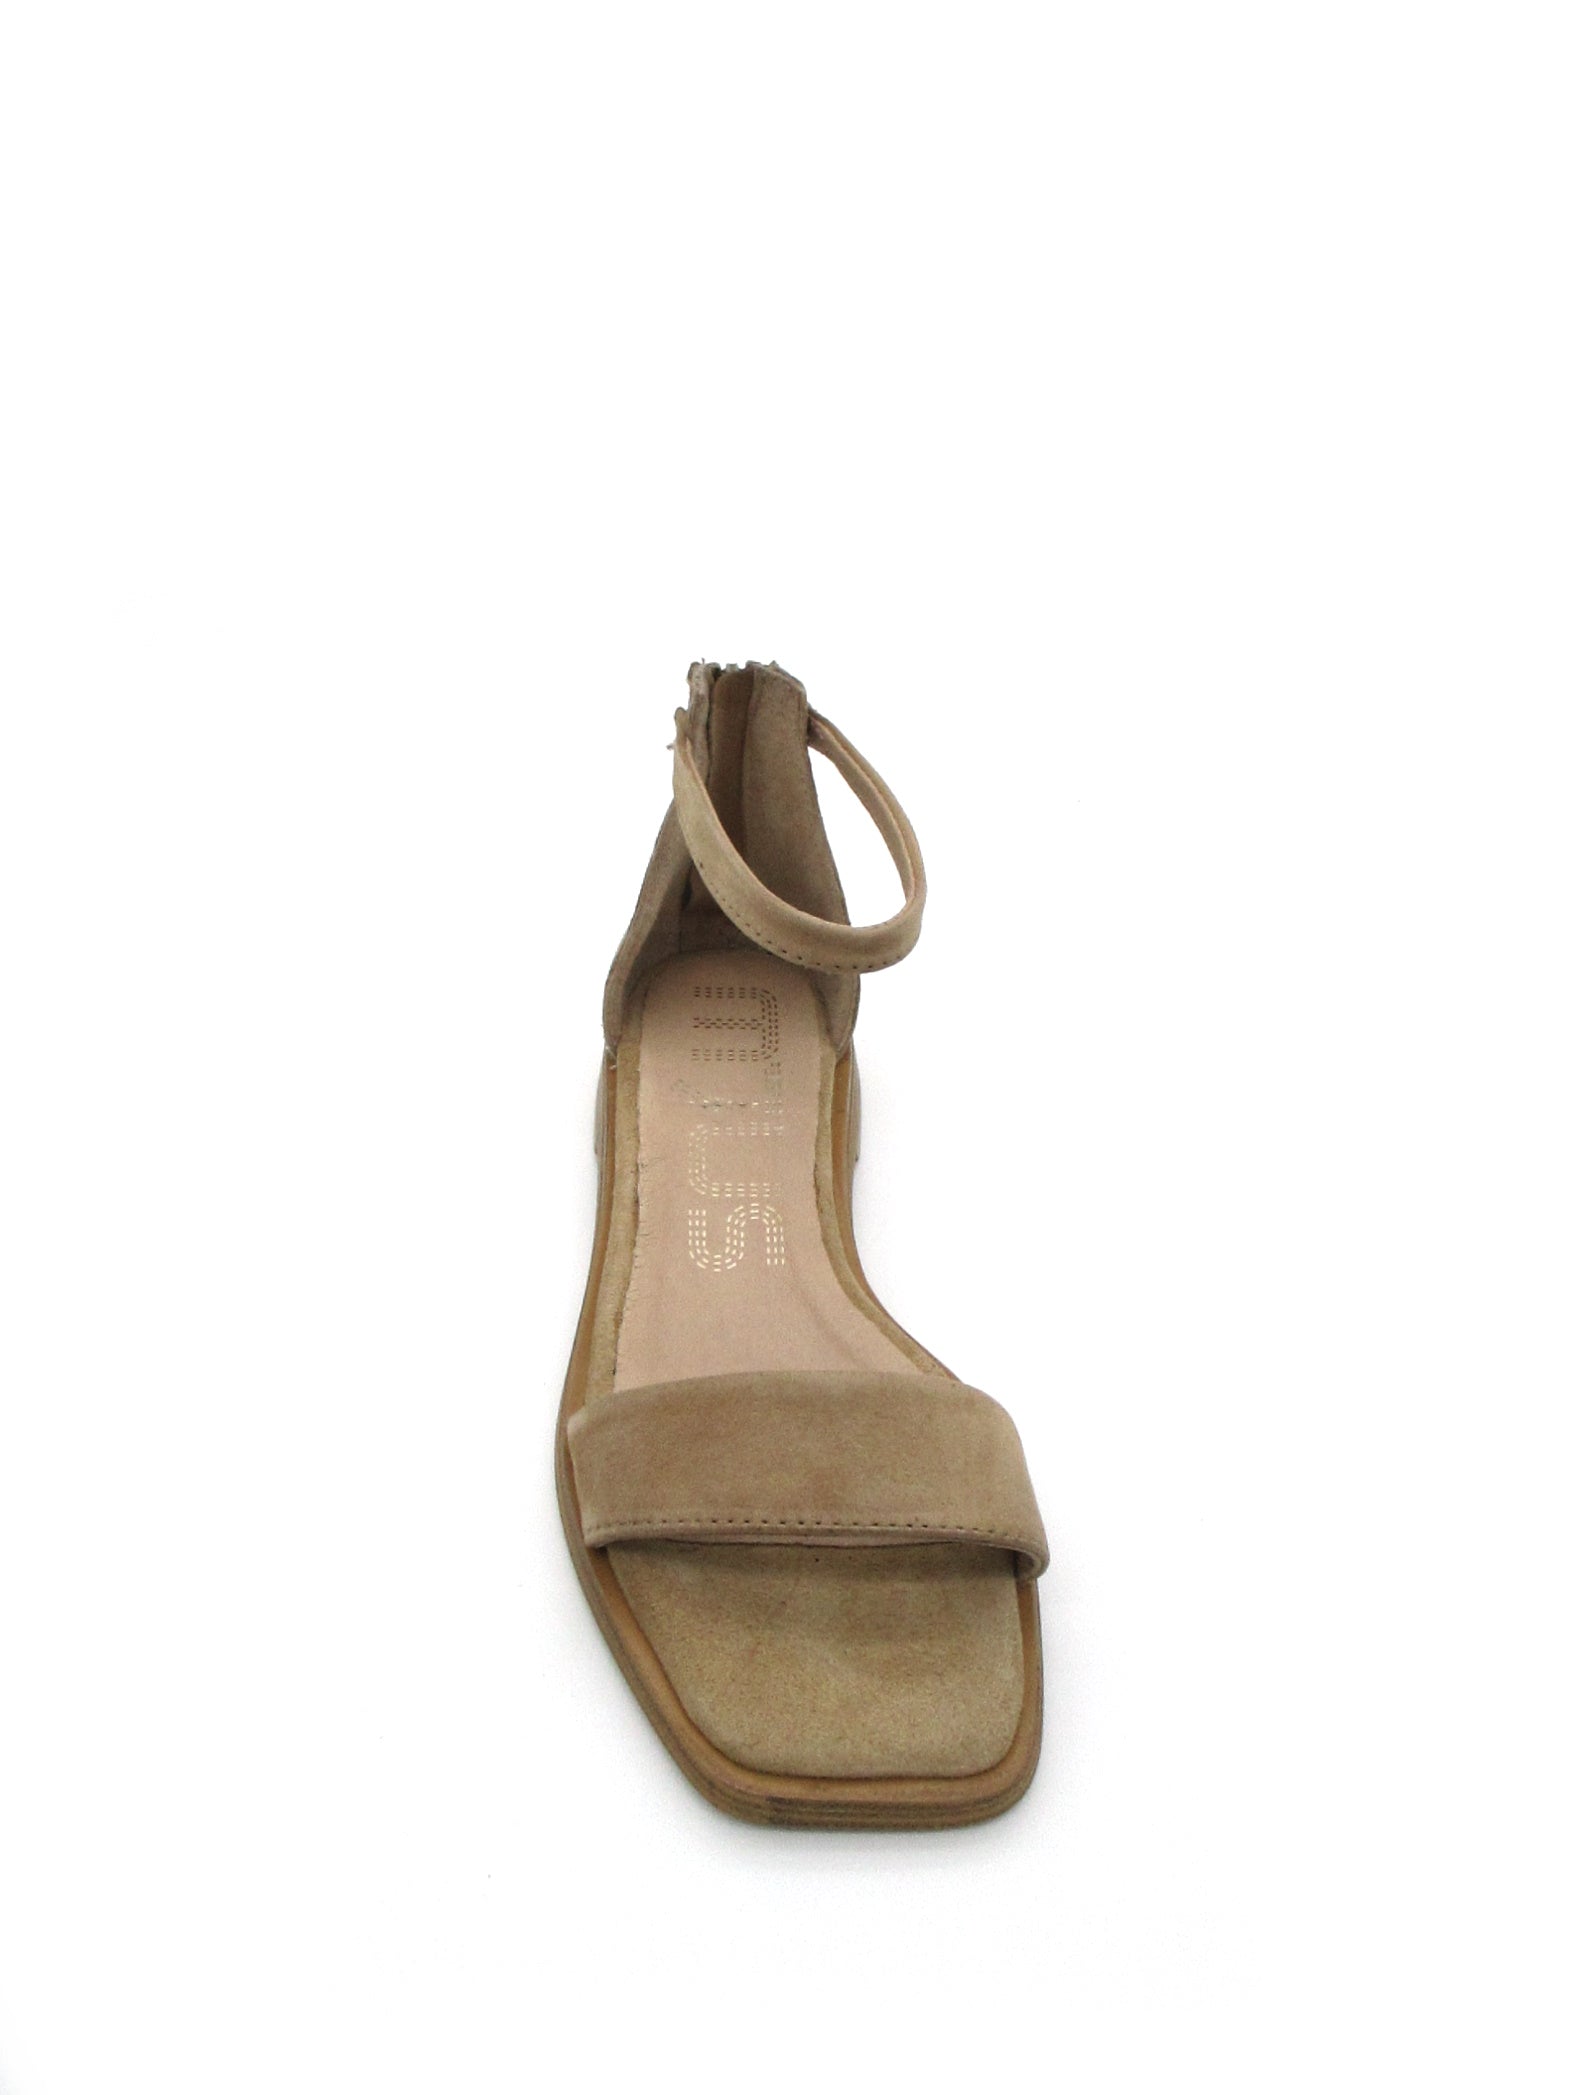 Sandalo pelle basso donna Mjus Avena - T56002 -